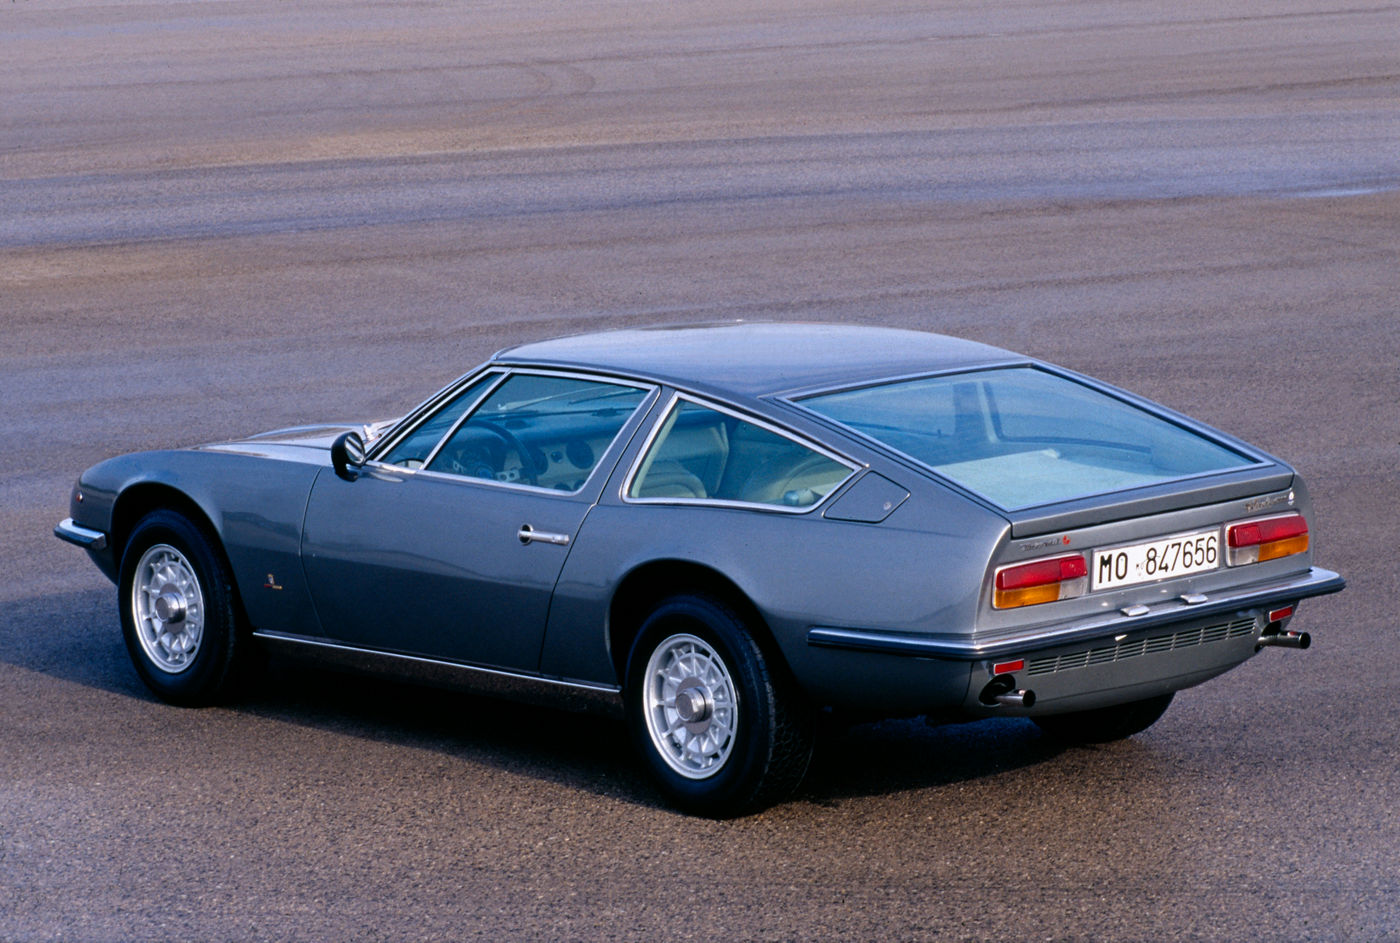 Maserati Classic - GranTurismo Indy - carrosserie grise - vue latérale postérieure